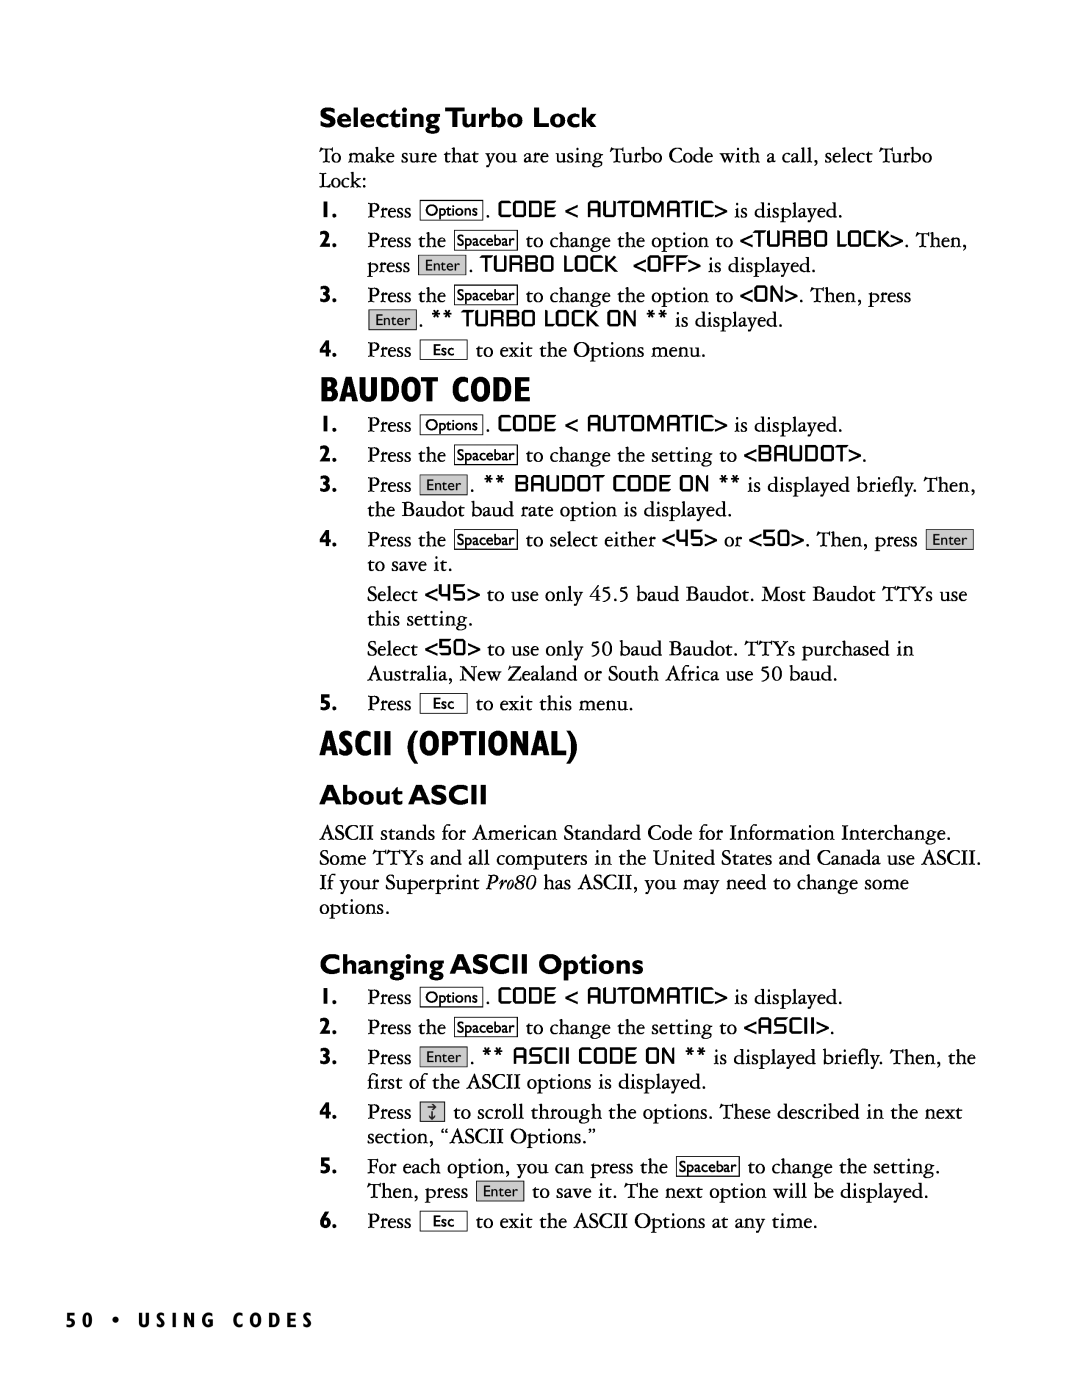 Ultratec PRO80TM manual Baudot Code, Ascii Optional, Selecting Turbo Lock, About ASCII, Changing ASCII Options 